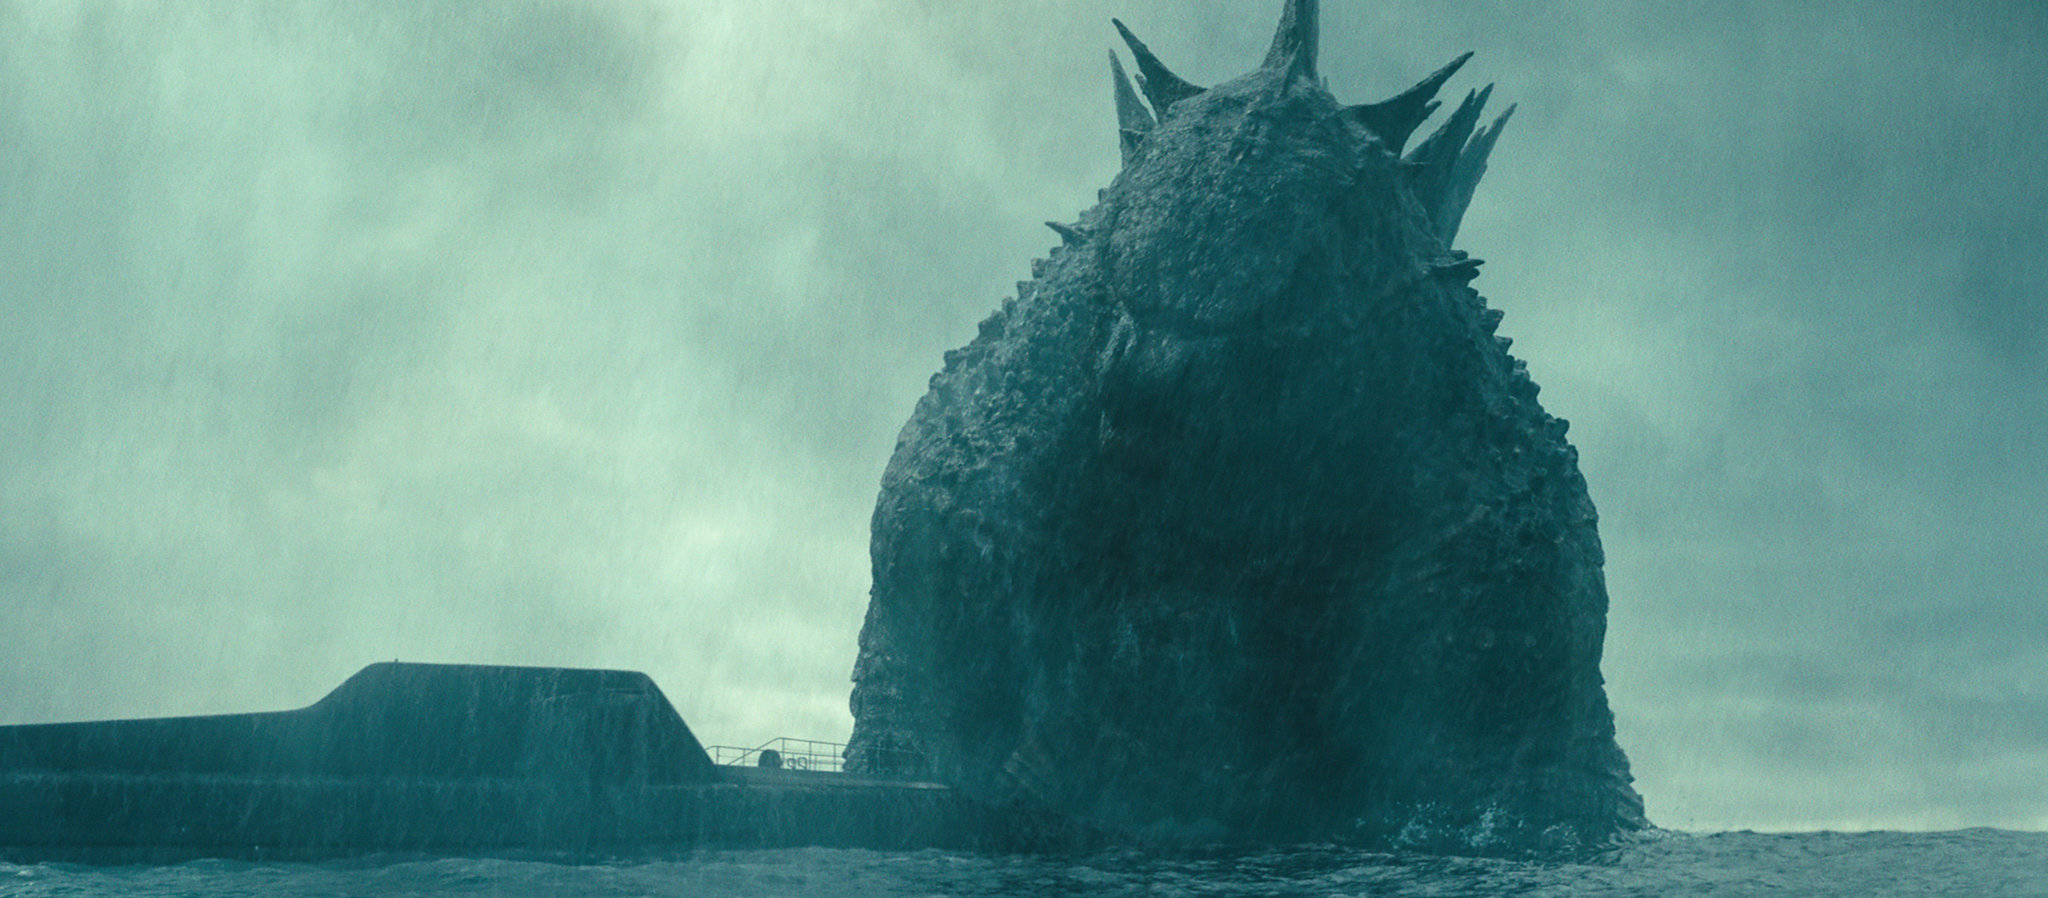 Godzilla looking menacingly